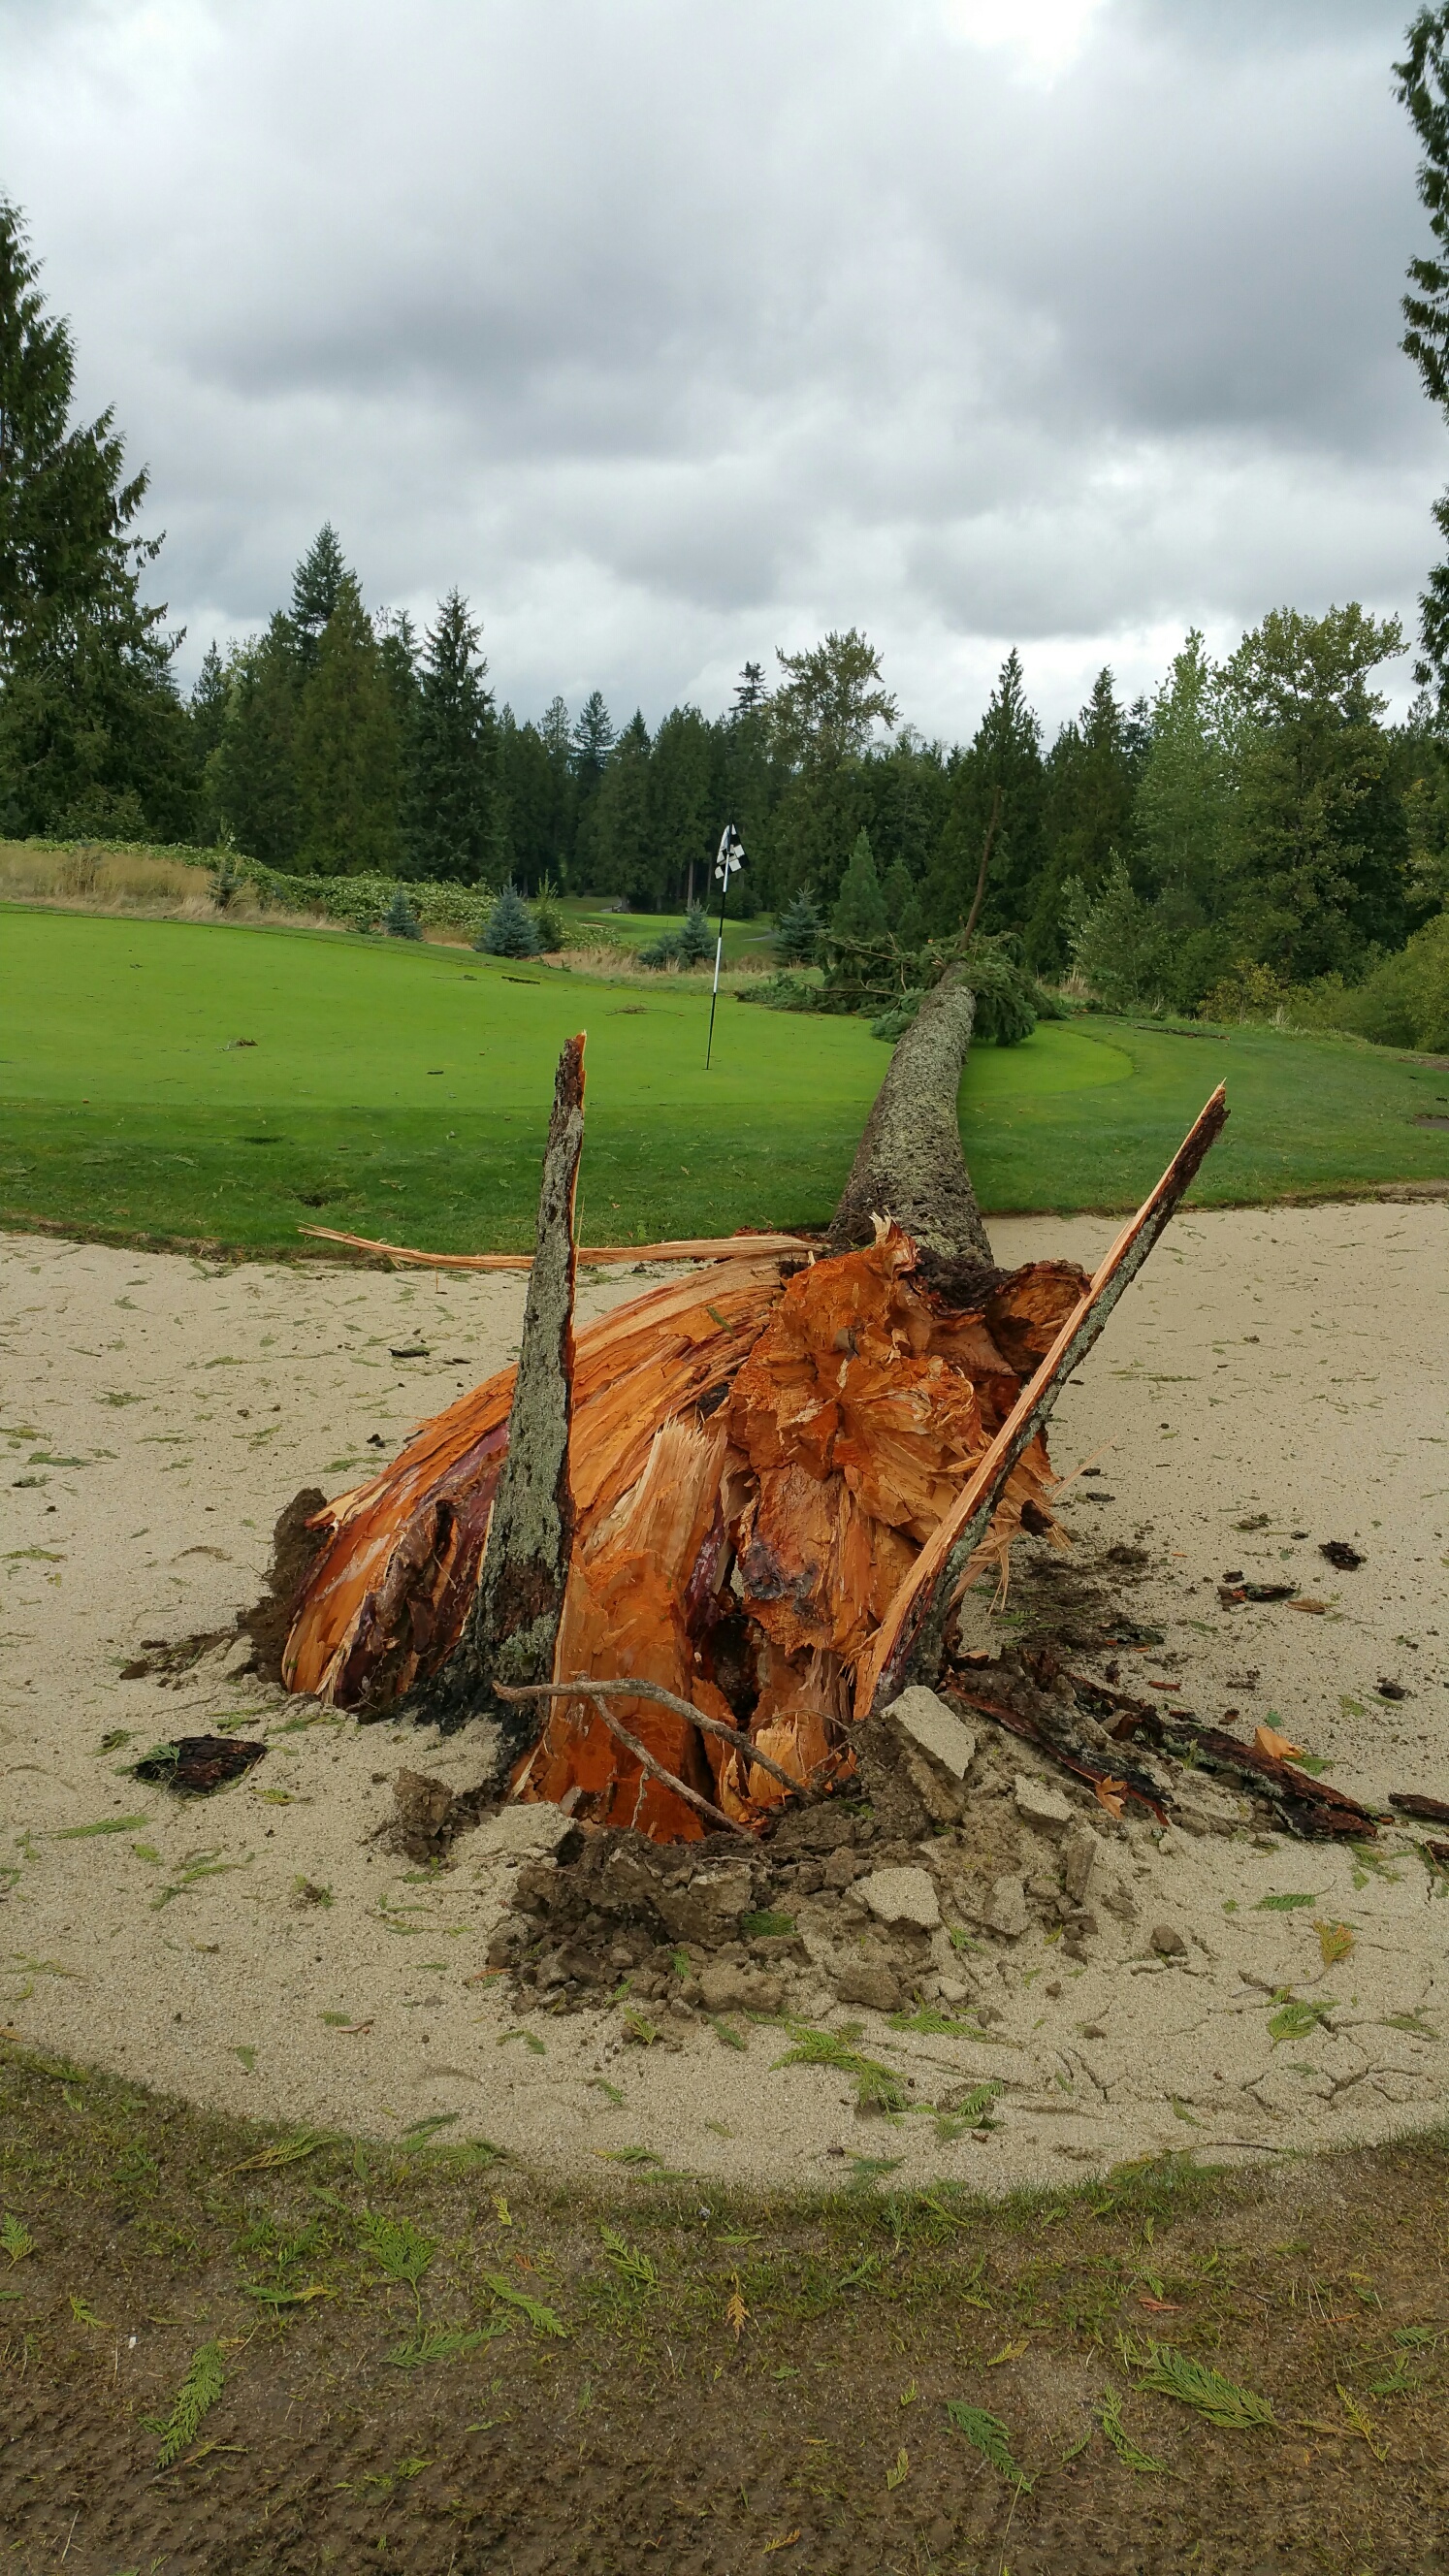 Storm 2015 aftermath - fallen tree